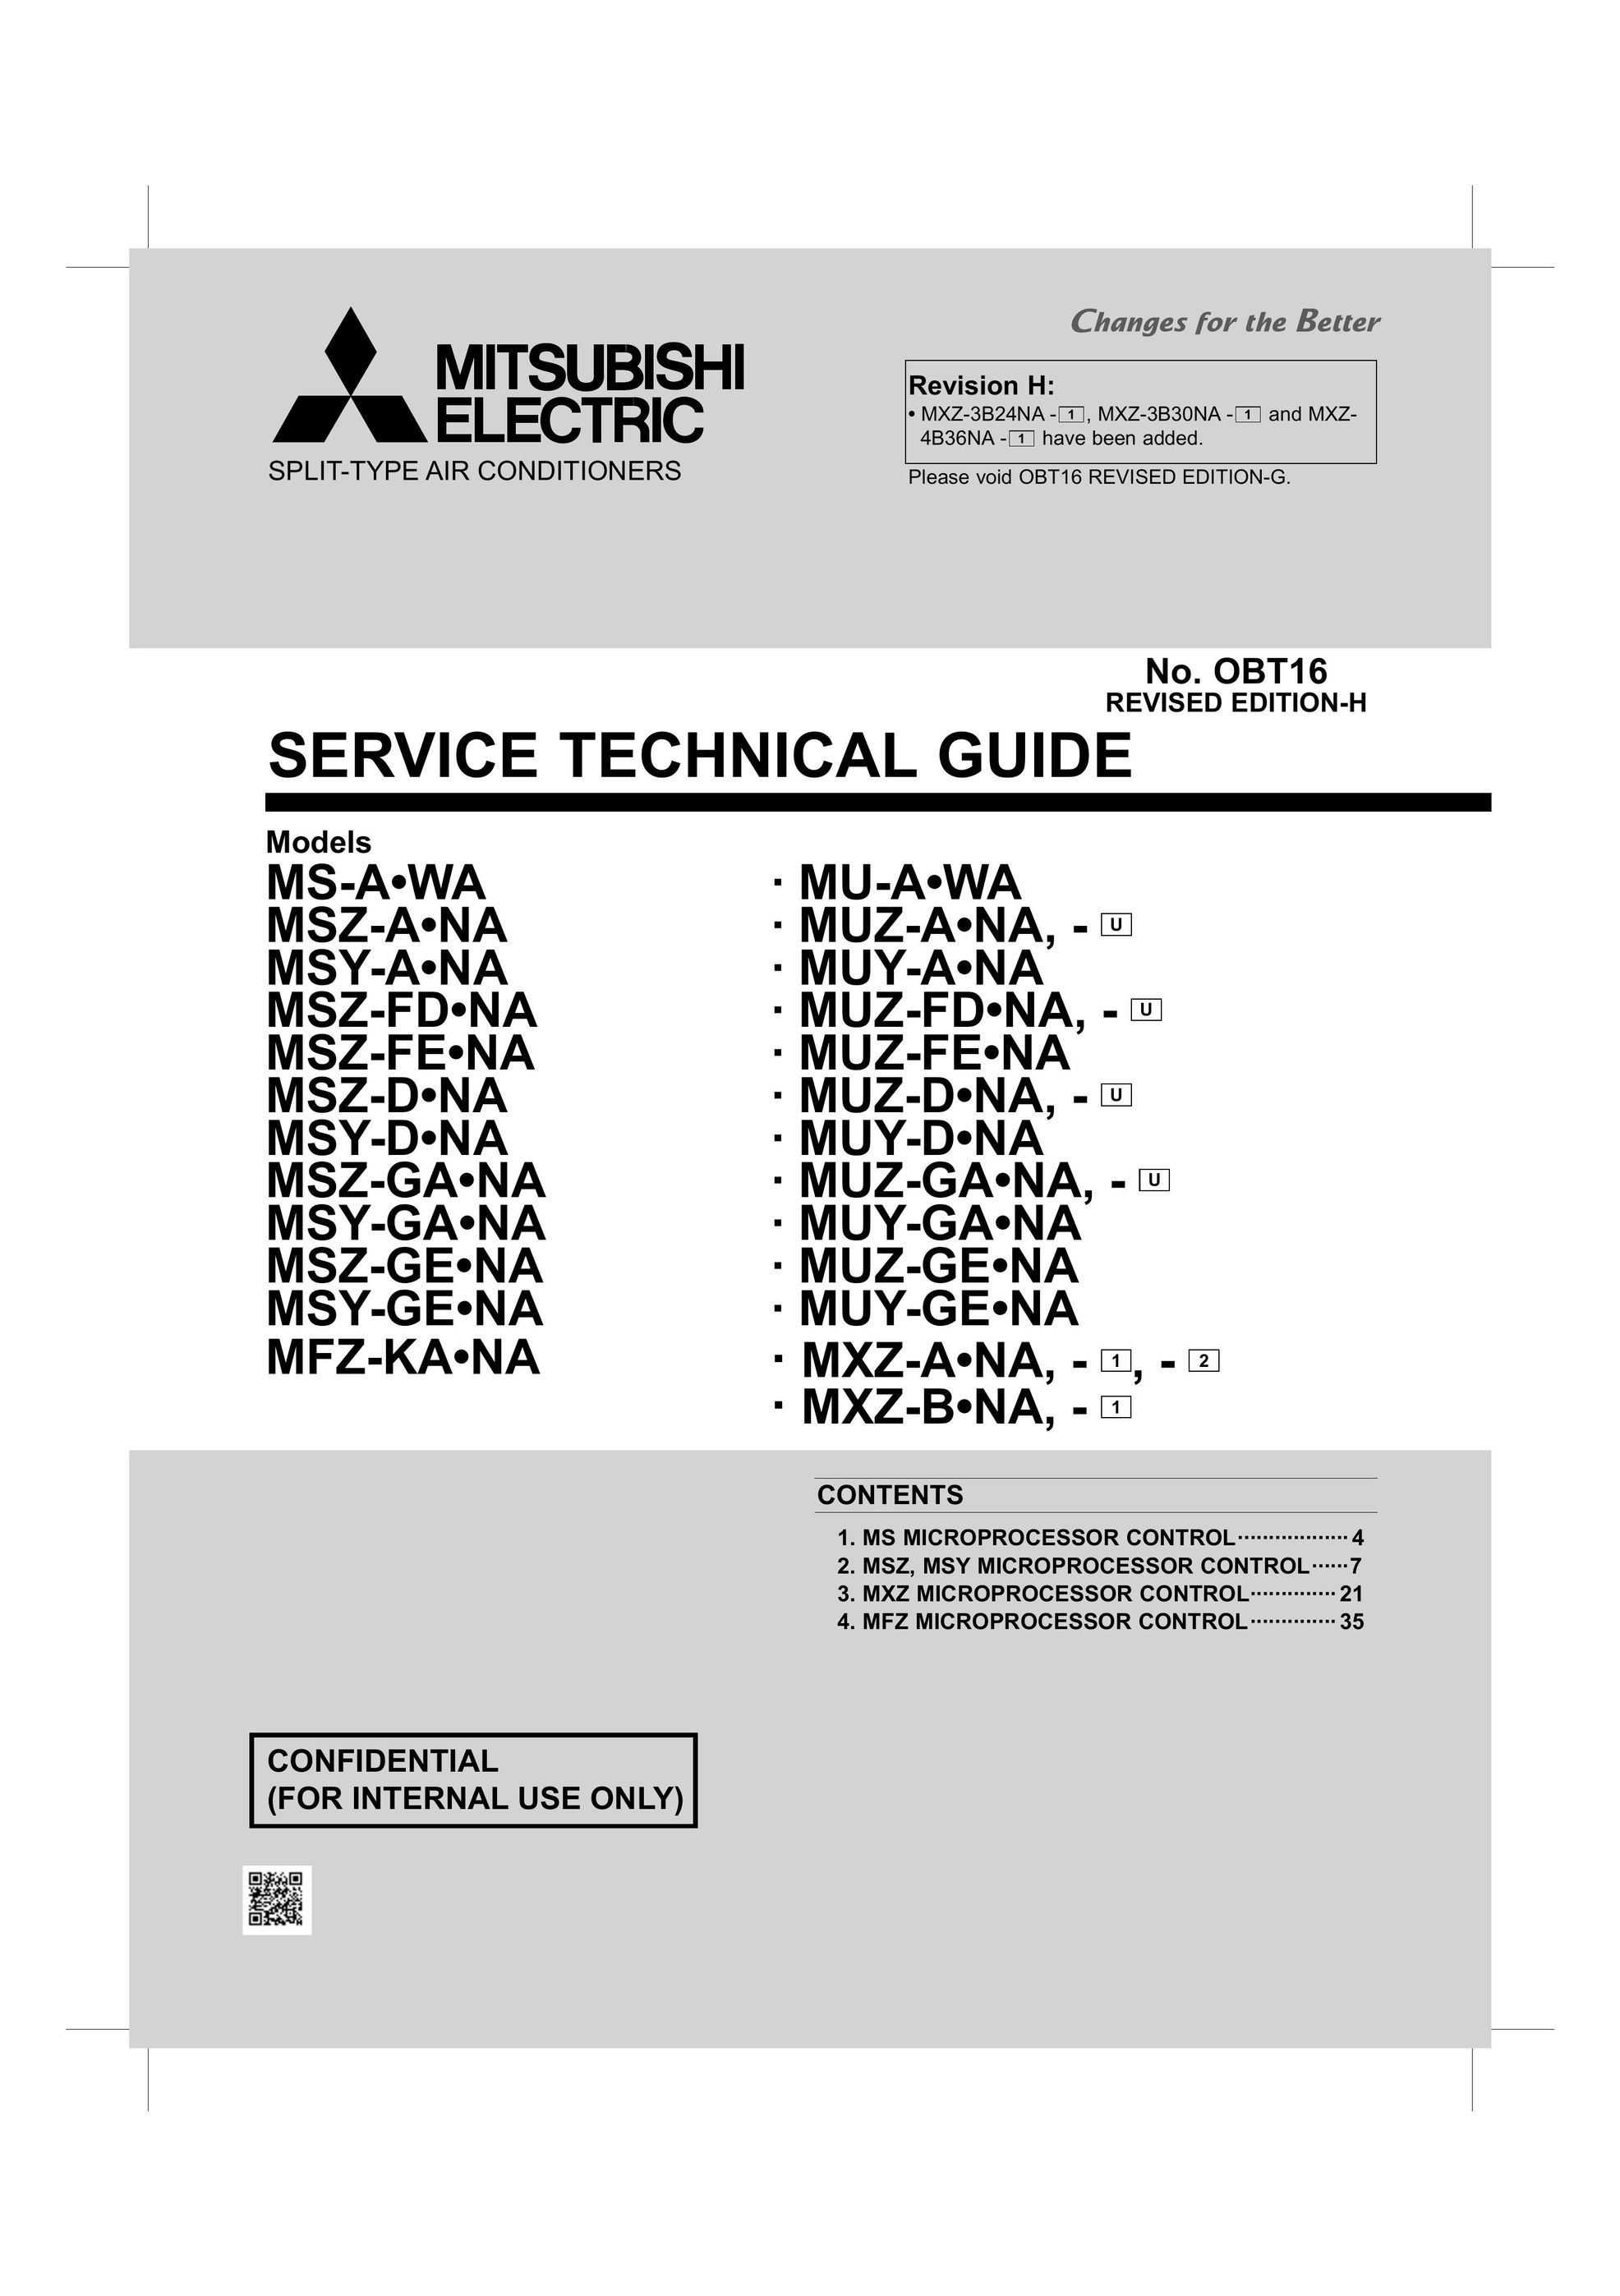 Mitsumi electronic MUY-GANA Air Conditioner User Manual